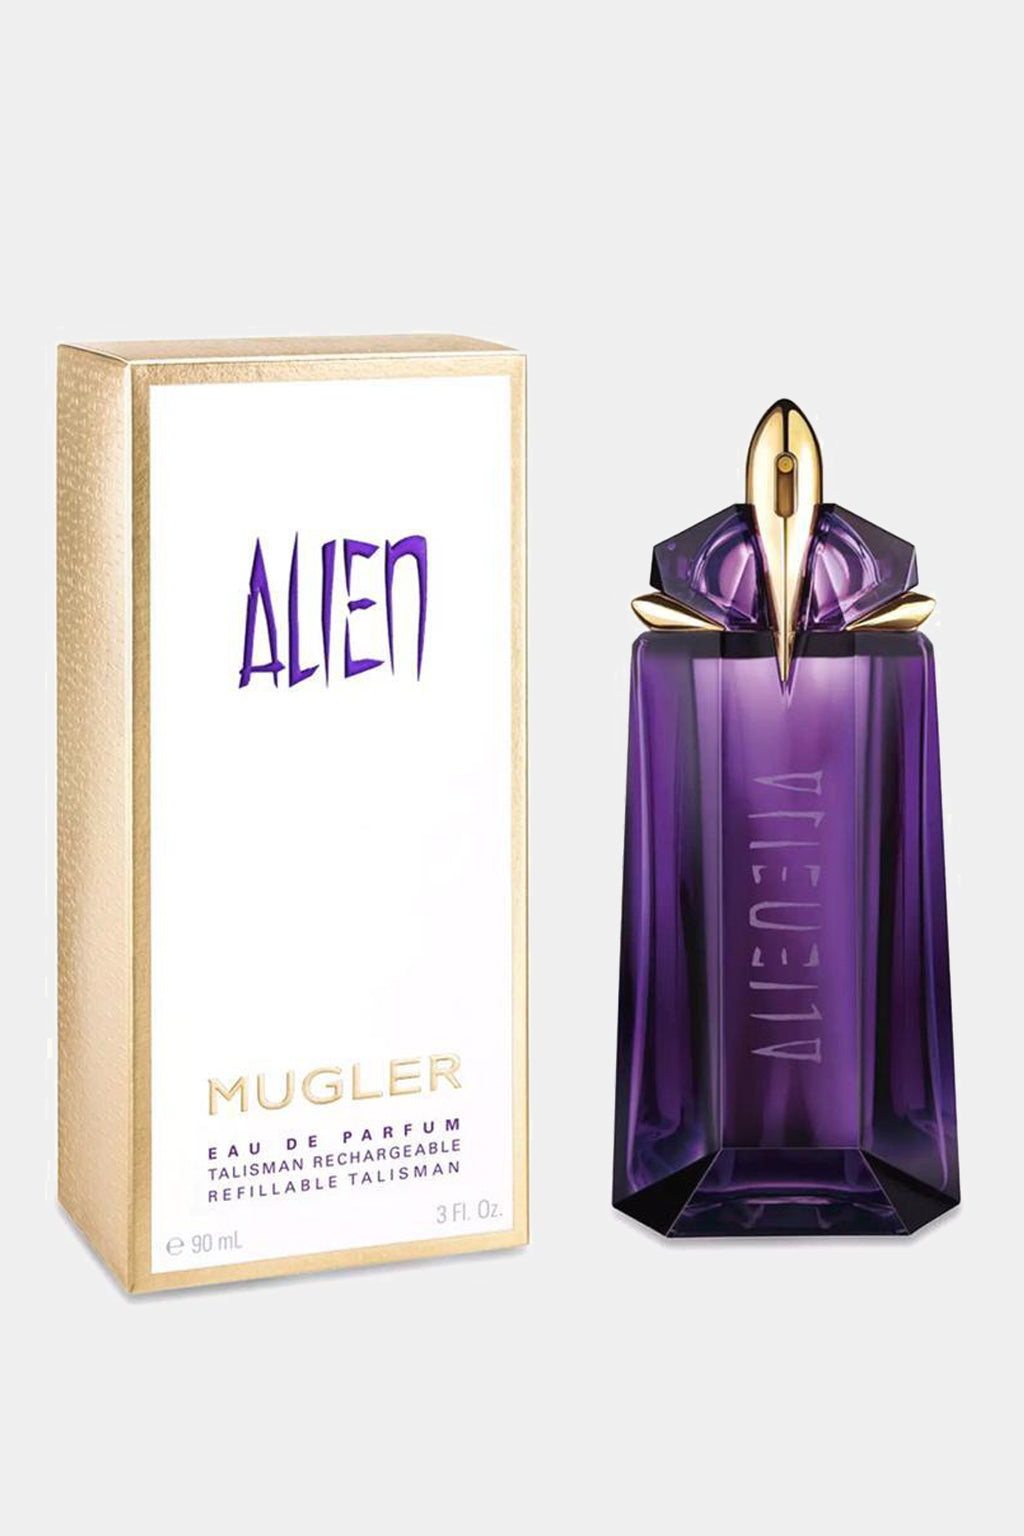 Thierry Mugler - Alien Talisman Refillable Eau de Parfum